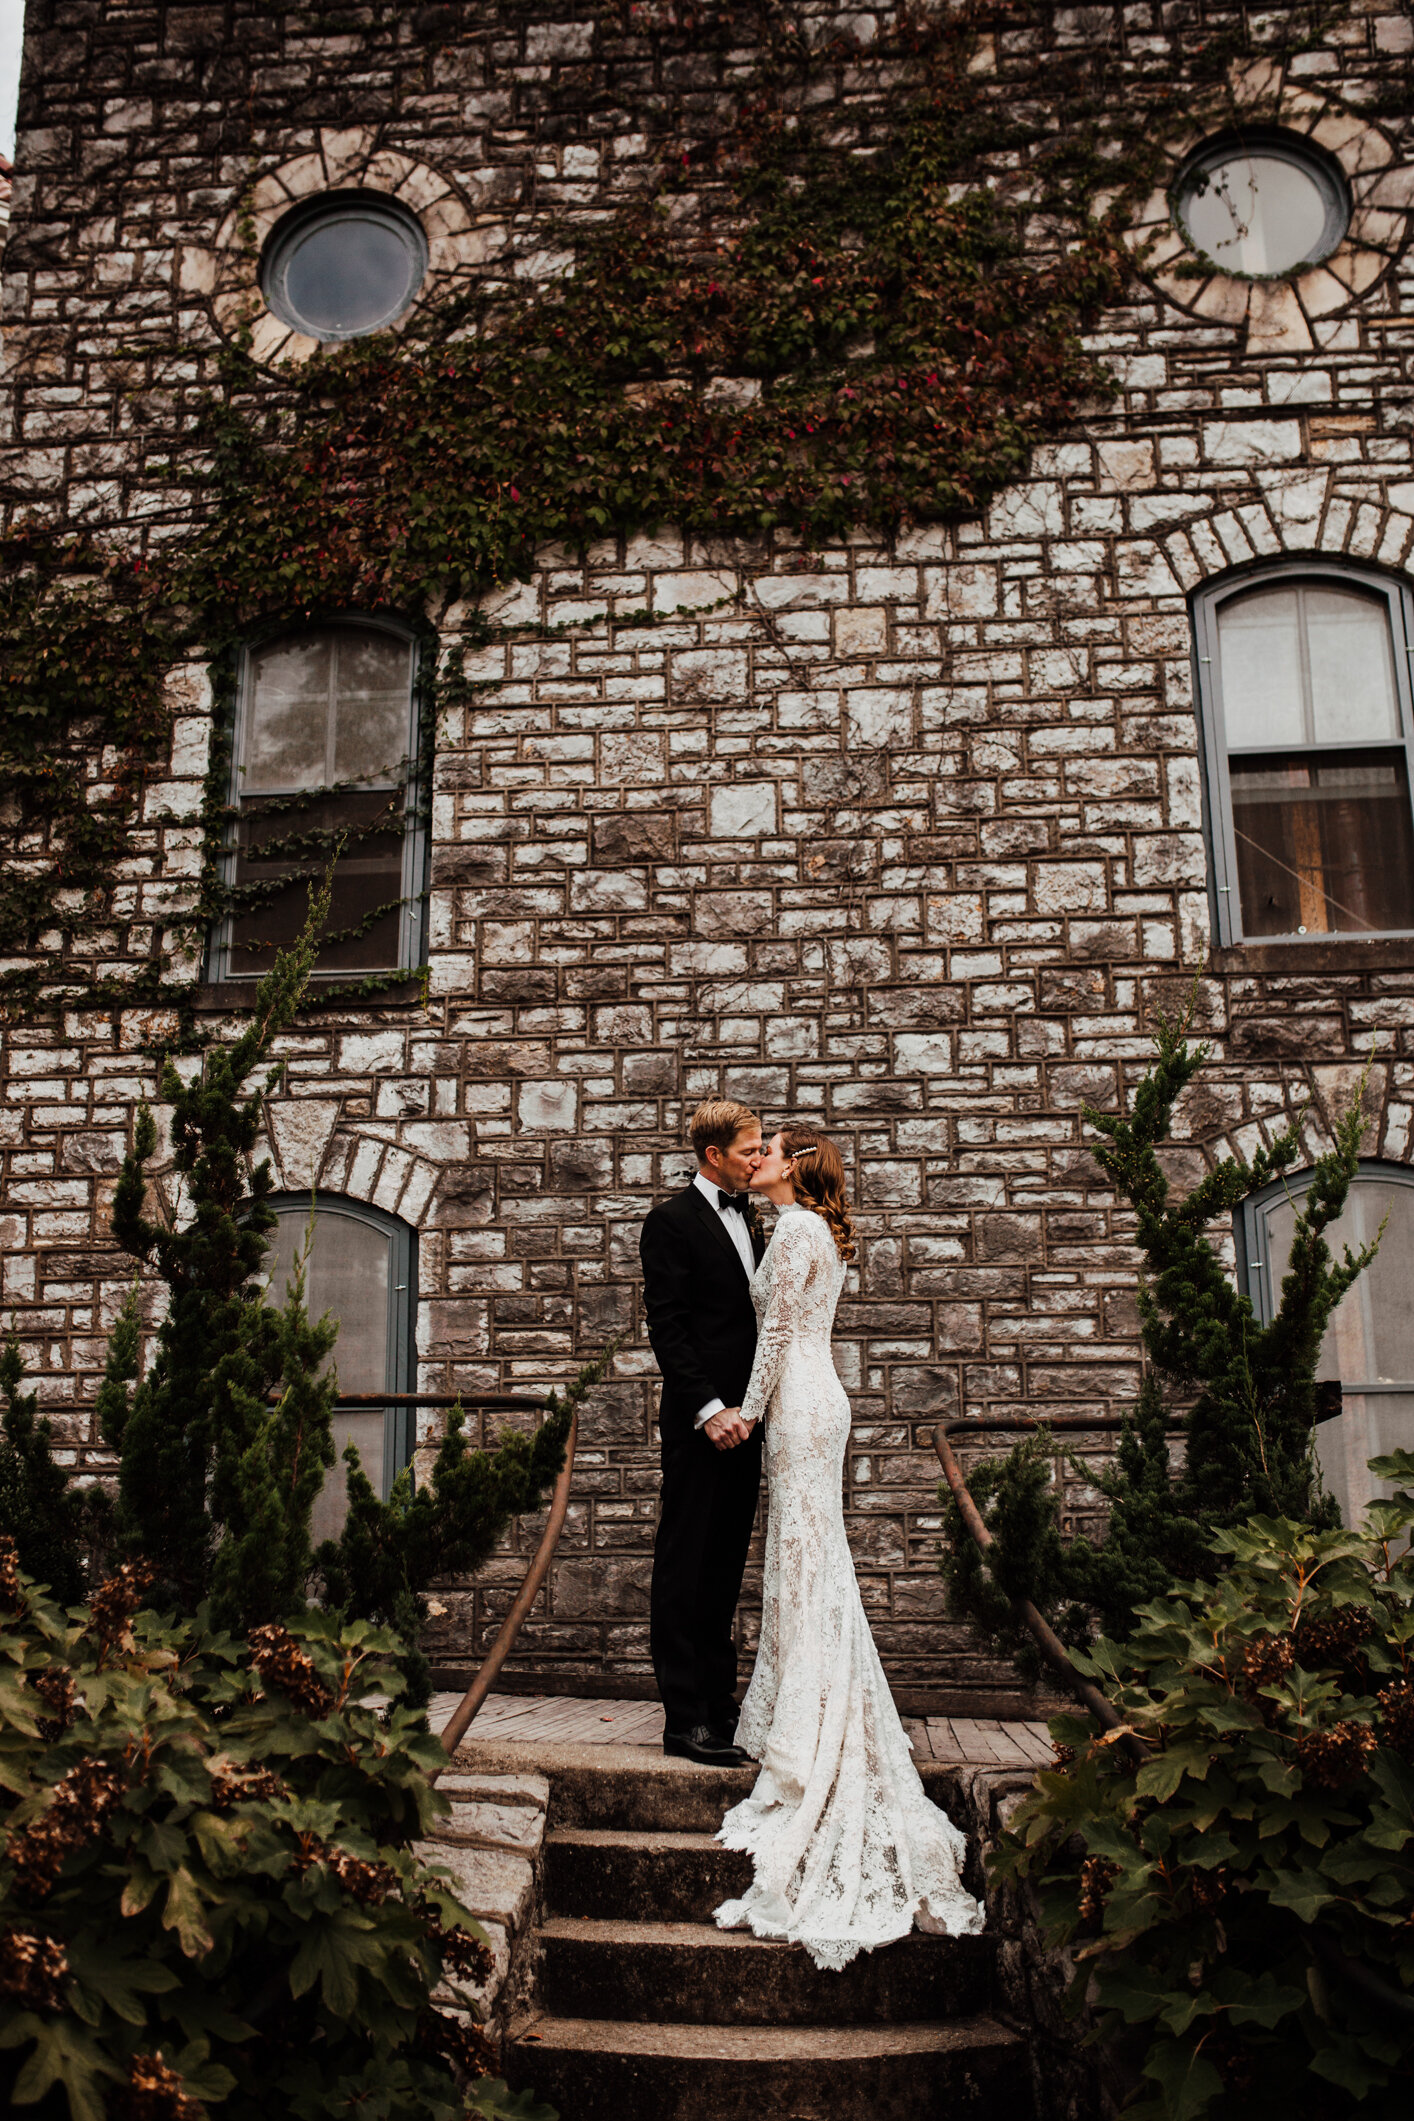 lexington-wedding-photographer-castle-and-key-crystal-ludwick-photo (46 of 235).jpg